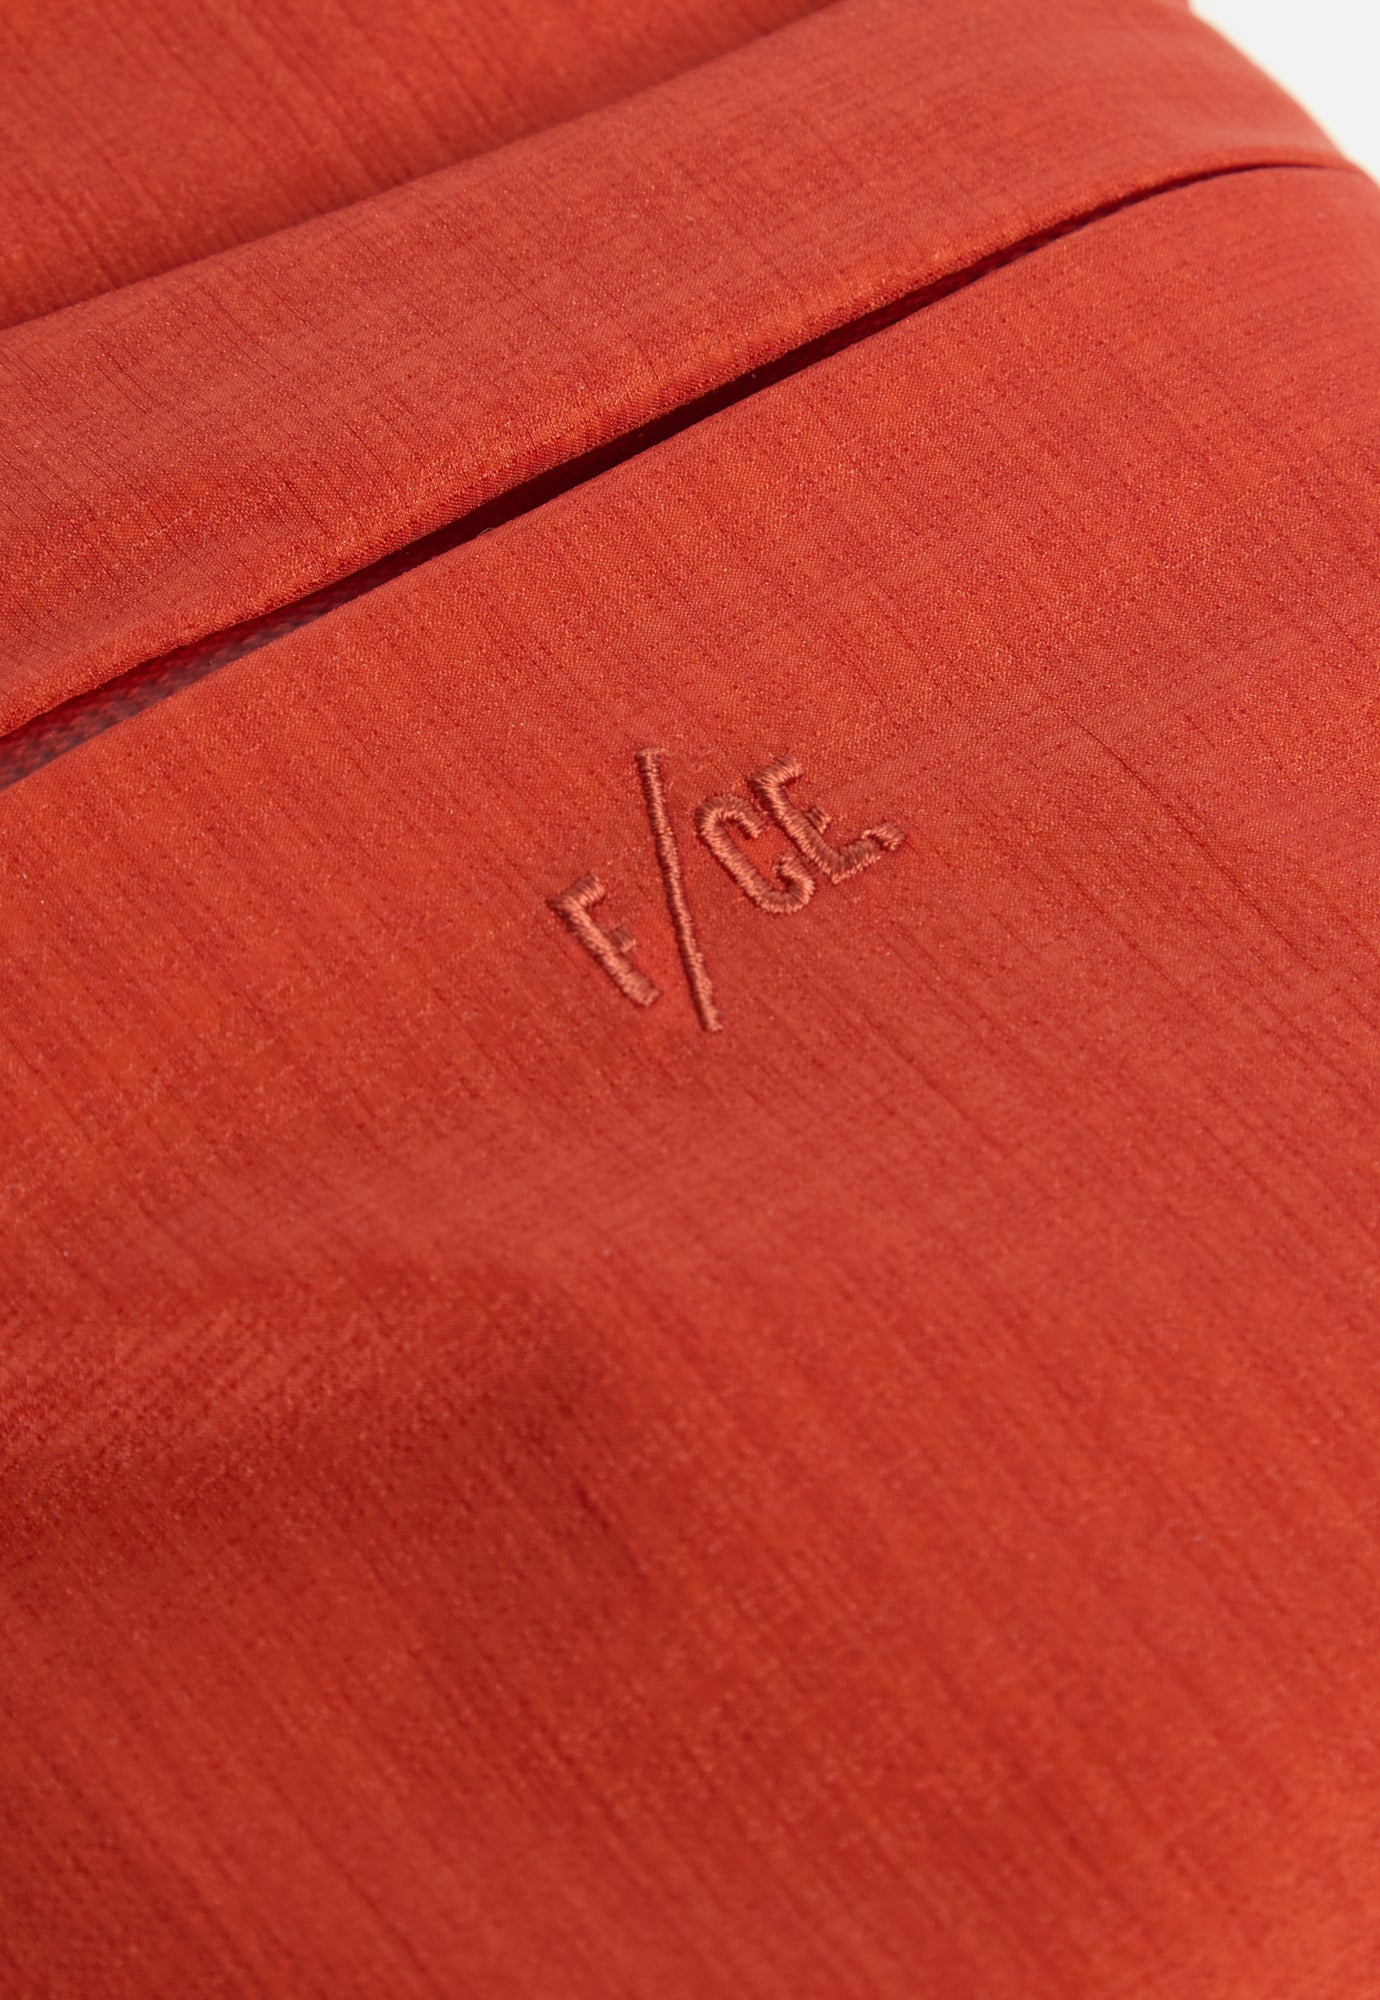 F/CE.® 2.5 Layer Portrait Shoulder/Crossbody Bag in Burnt Orange Nylon